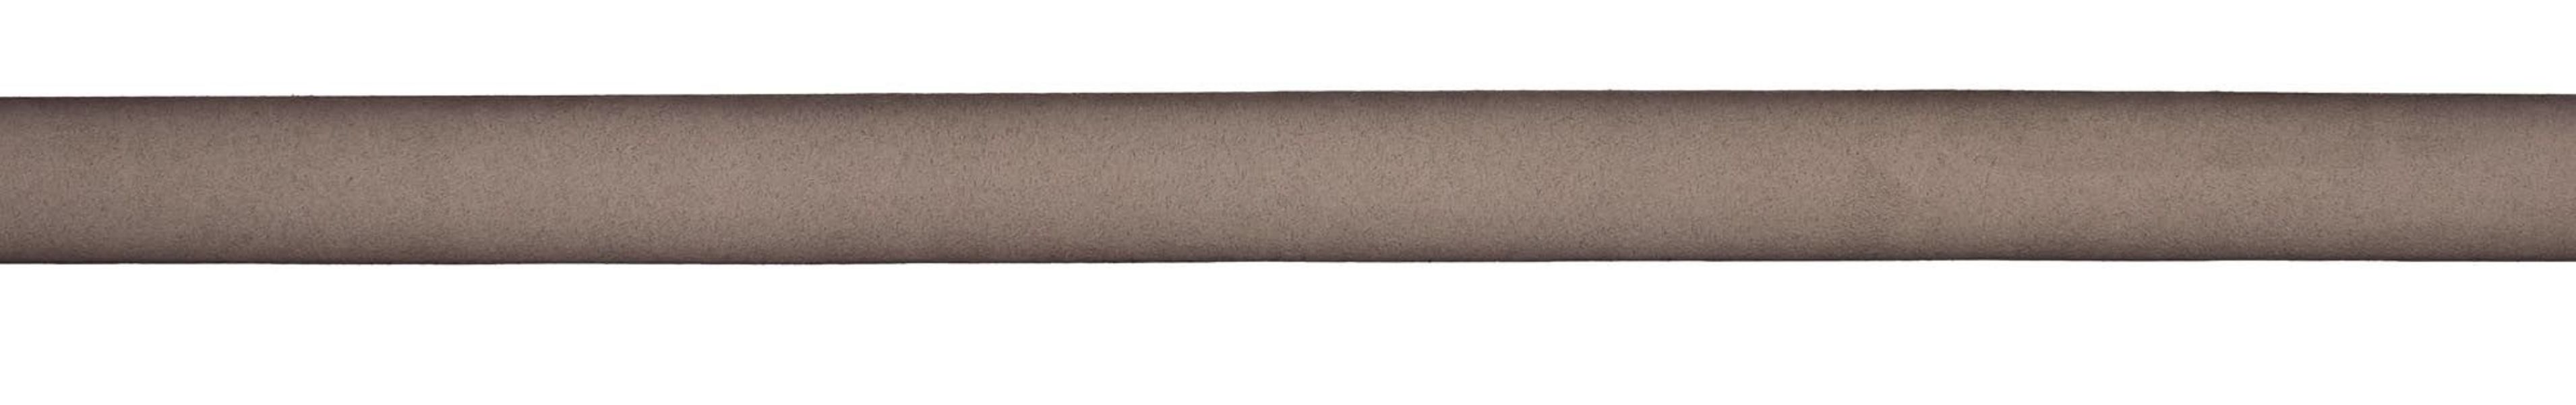 Vanzetti 40 mm Ledergürtel - silver/gray/beige (0620)